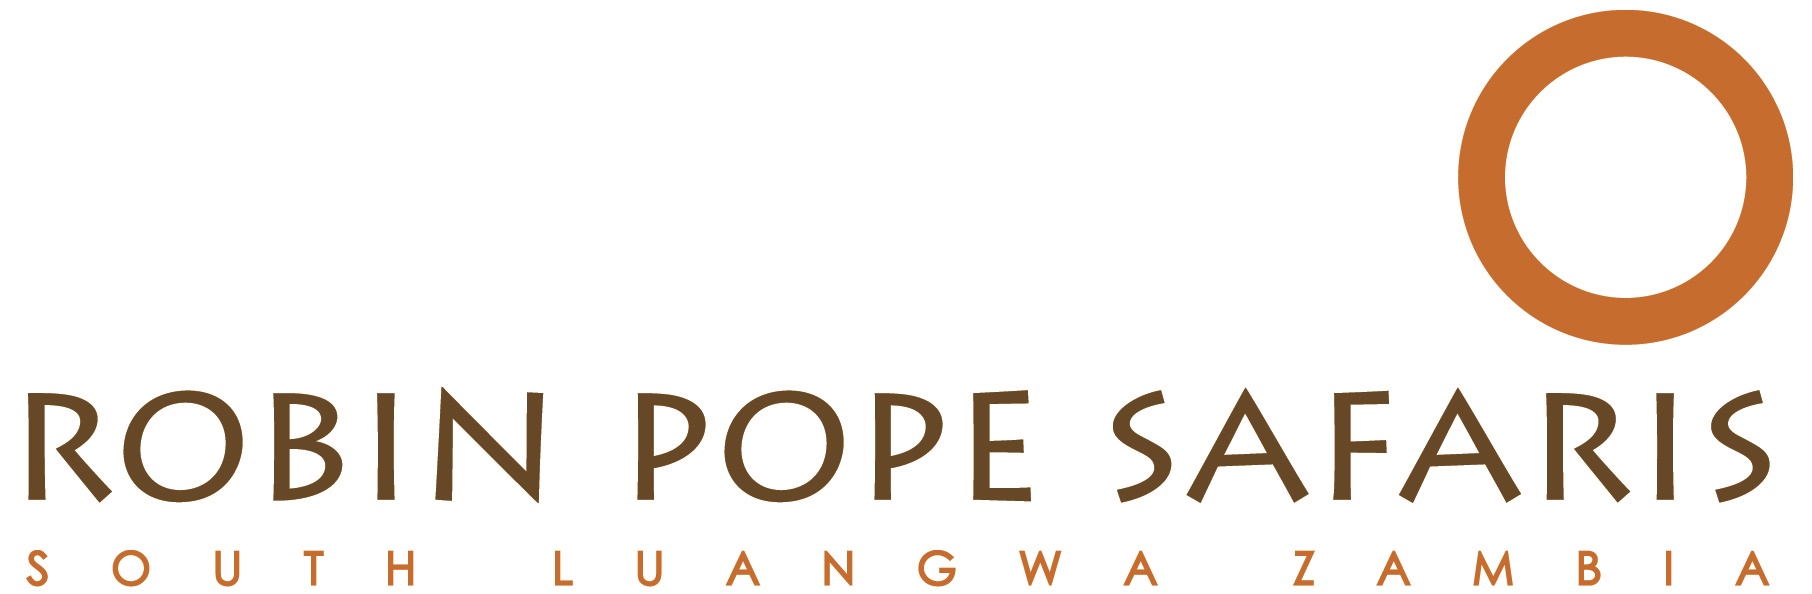 Robin Pope Safaris_Logo.jpg